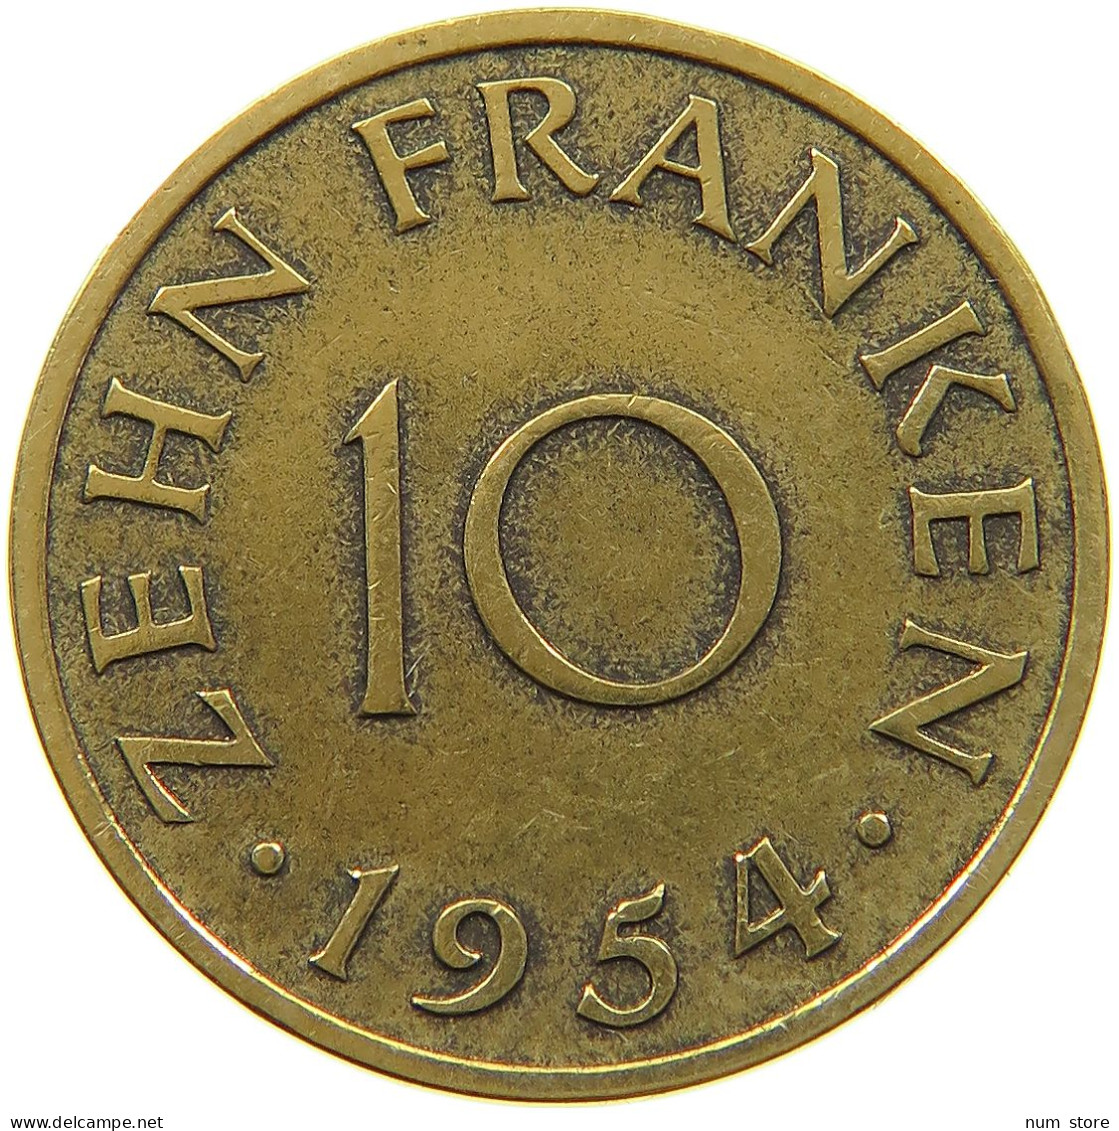 GERMANY WEST 10 FRANKEN 1954 SAARLAND #a021 0157 - 10 Franken